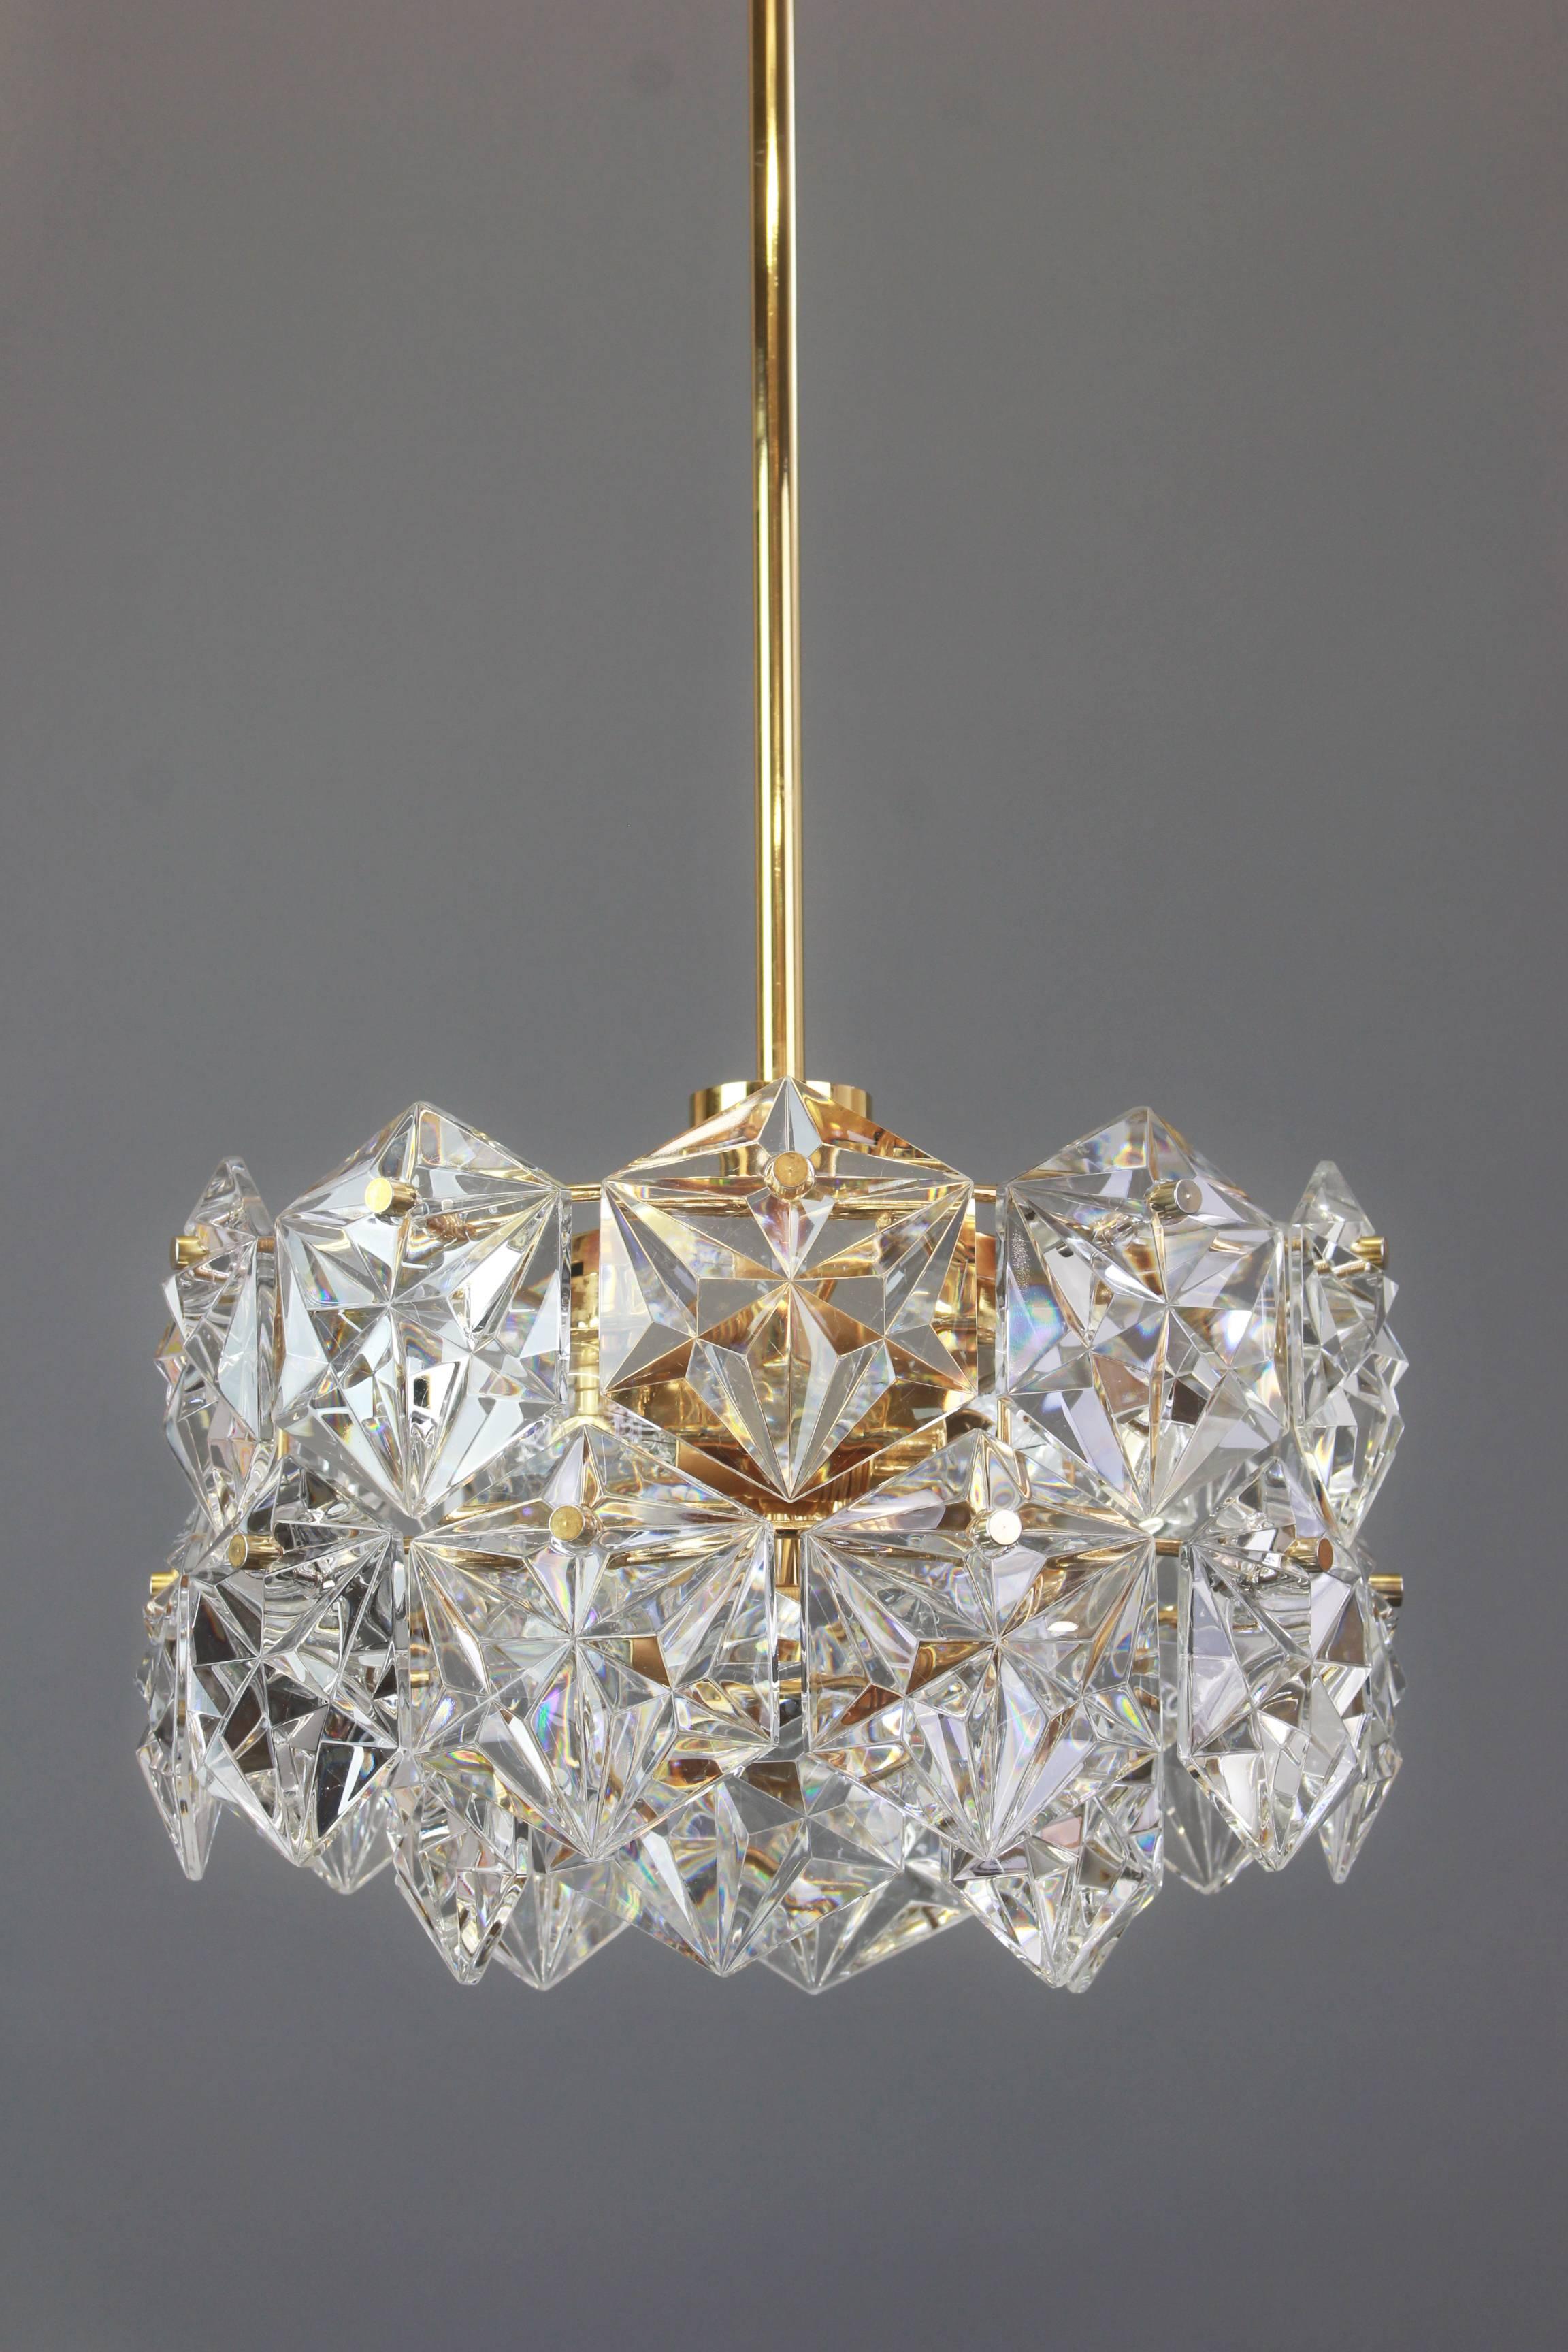 1 of 2 Stunning Chandelier, Brass and Crystal Glass by Kinkeldey, Germany, 1970 2